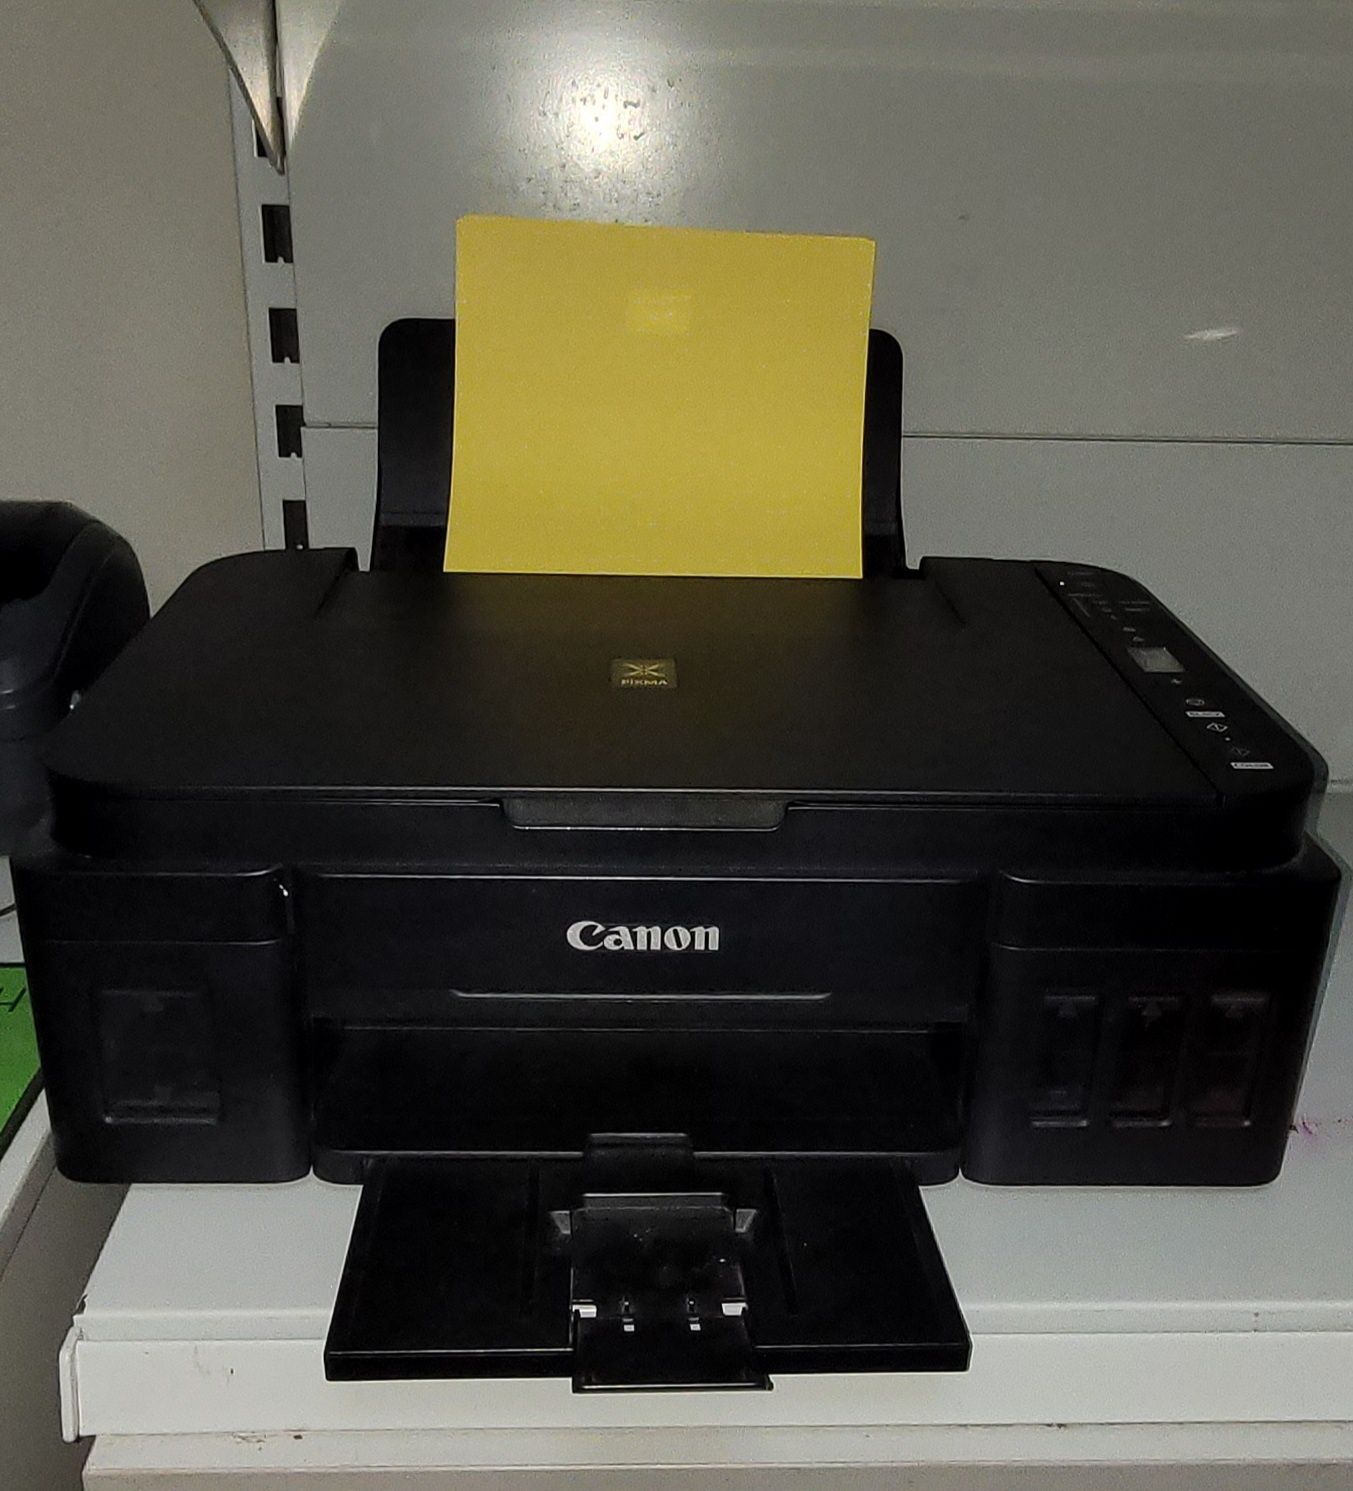 Canon G3411 цветной Принтер (МФУ)